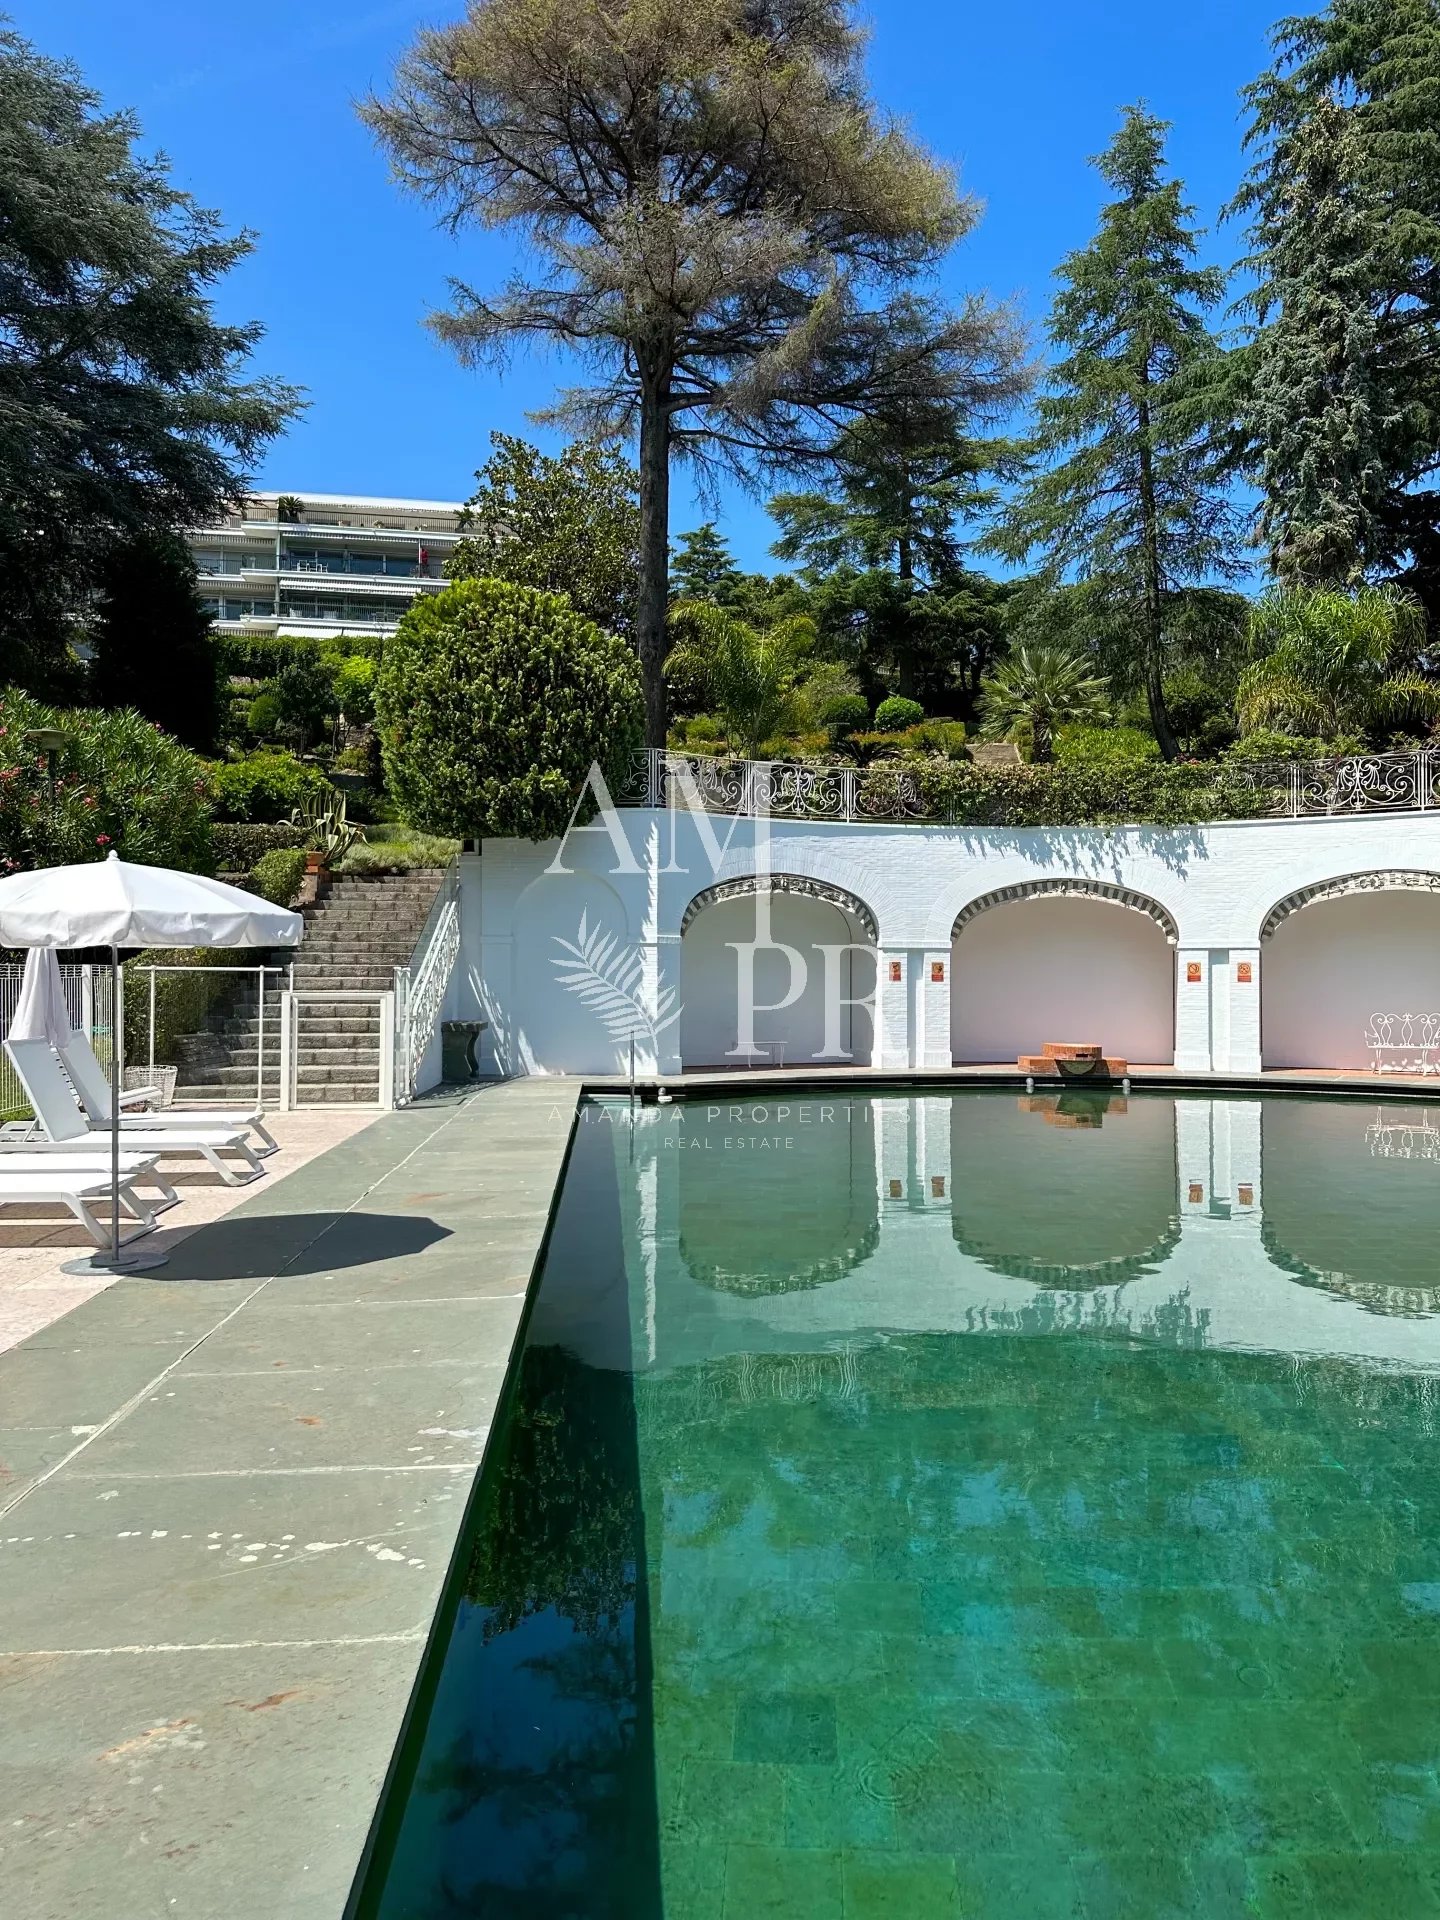 Cannes Croix des Gardes - Apartment villa 182sqm - Unobstructed view - Absolute tranquillity